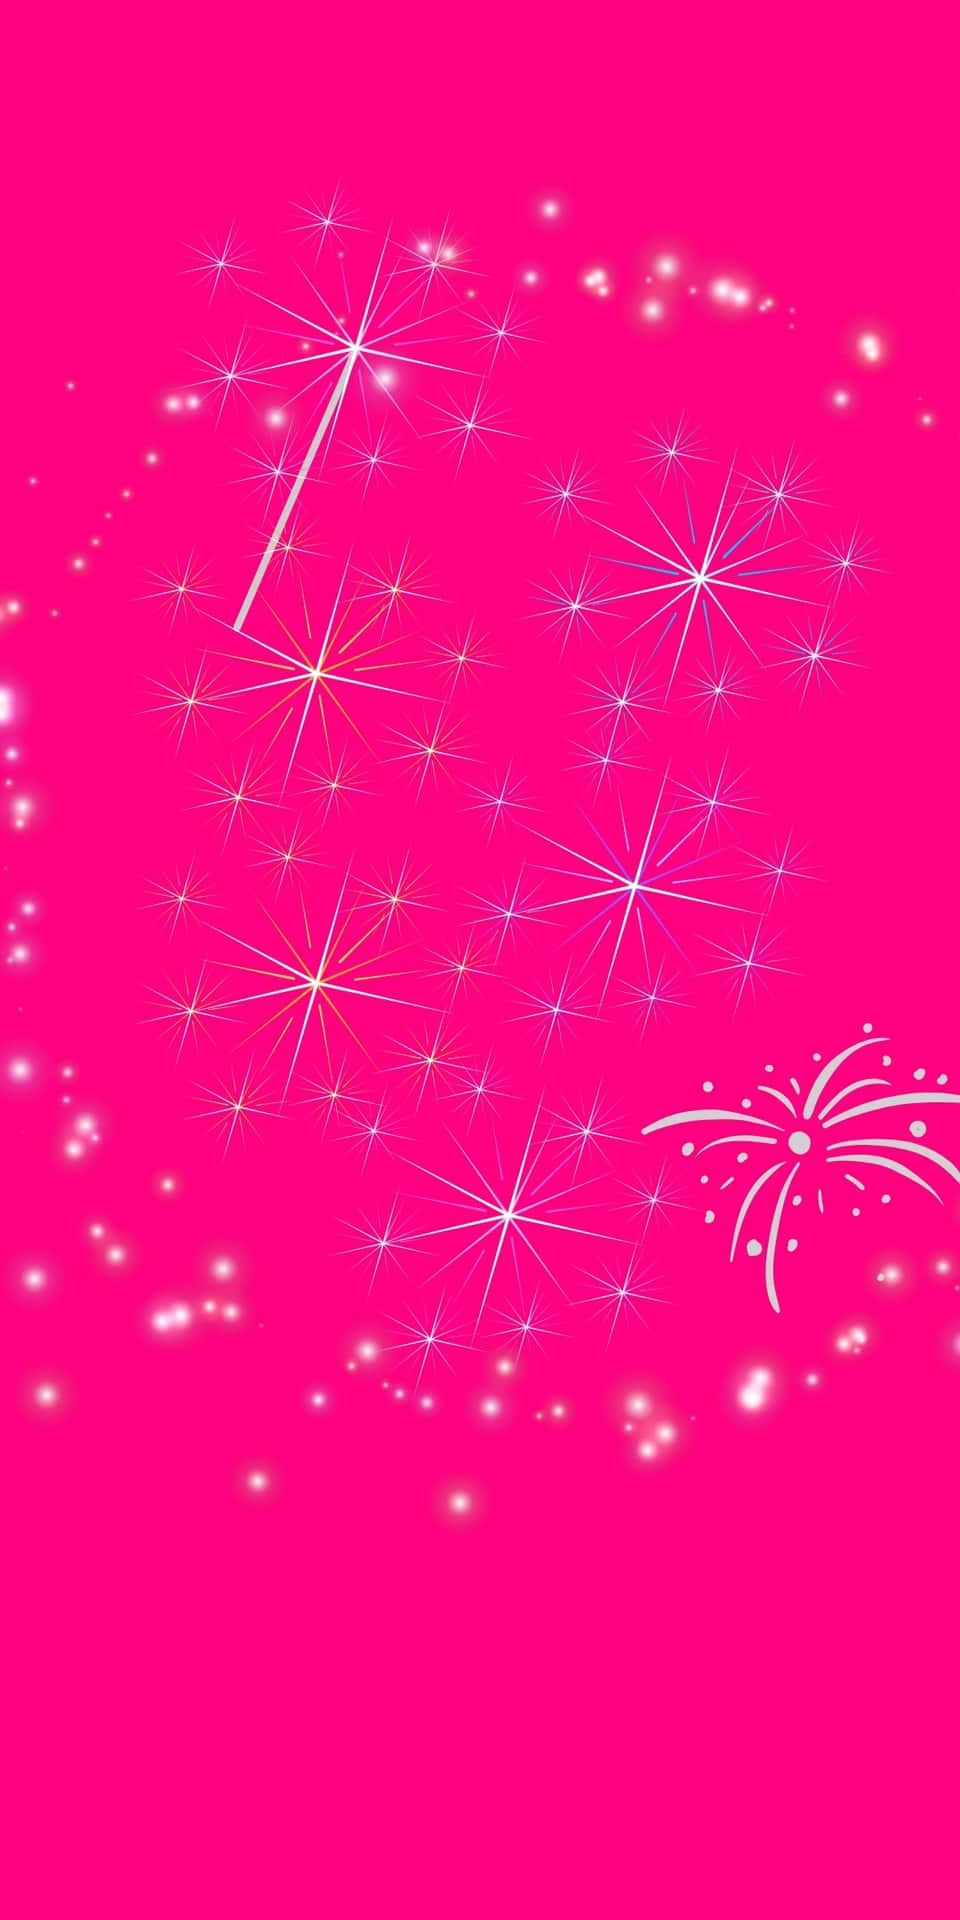 Sparkly Pink Fireworks Background